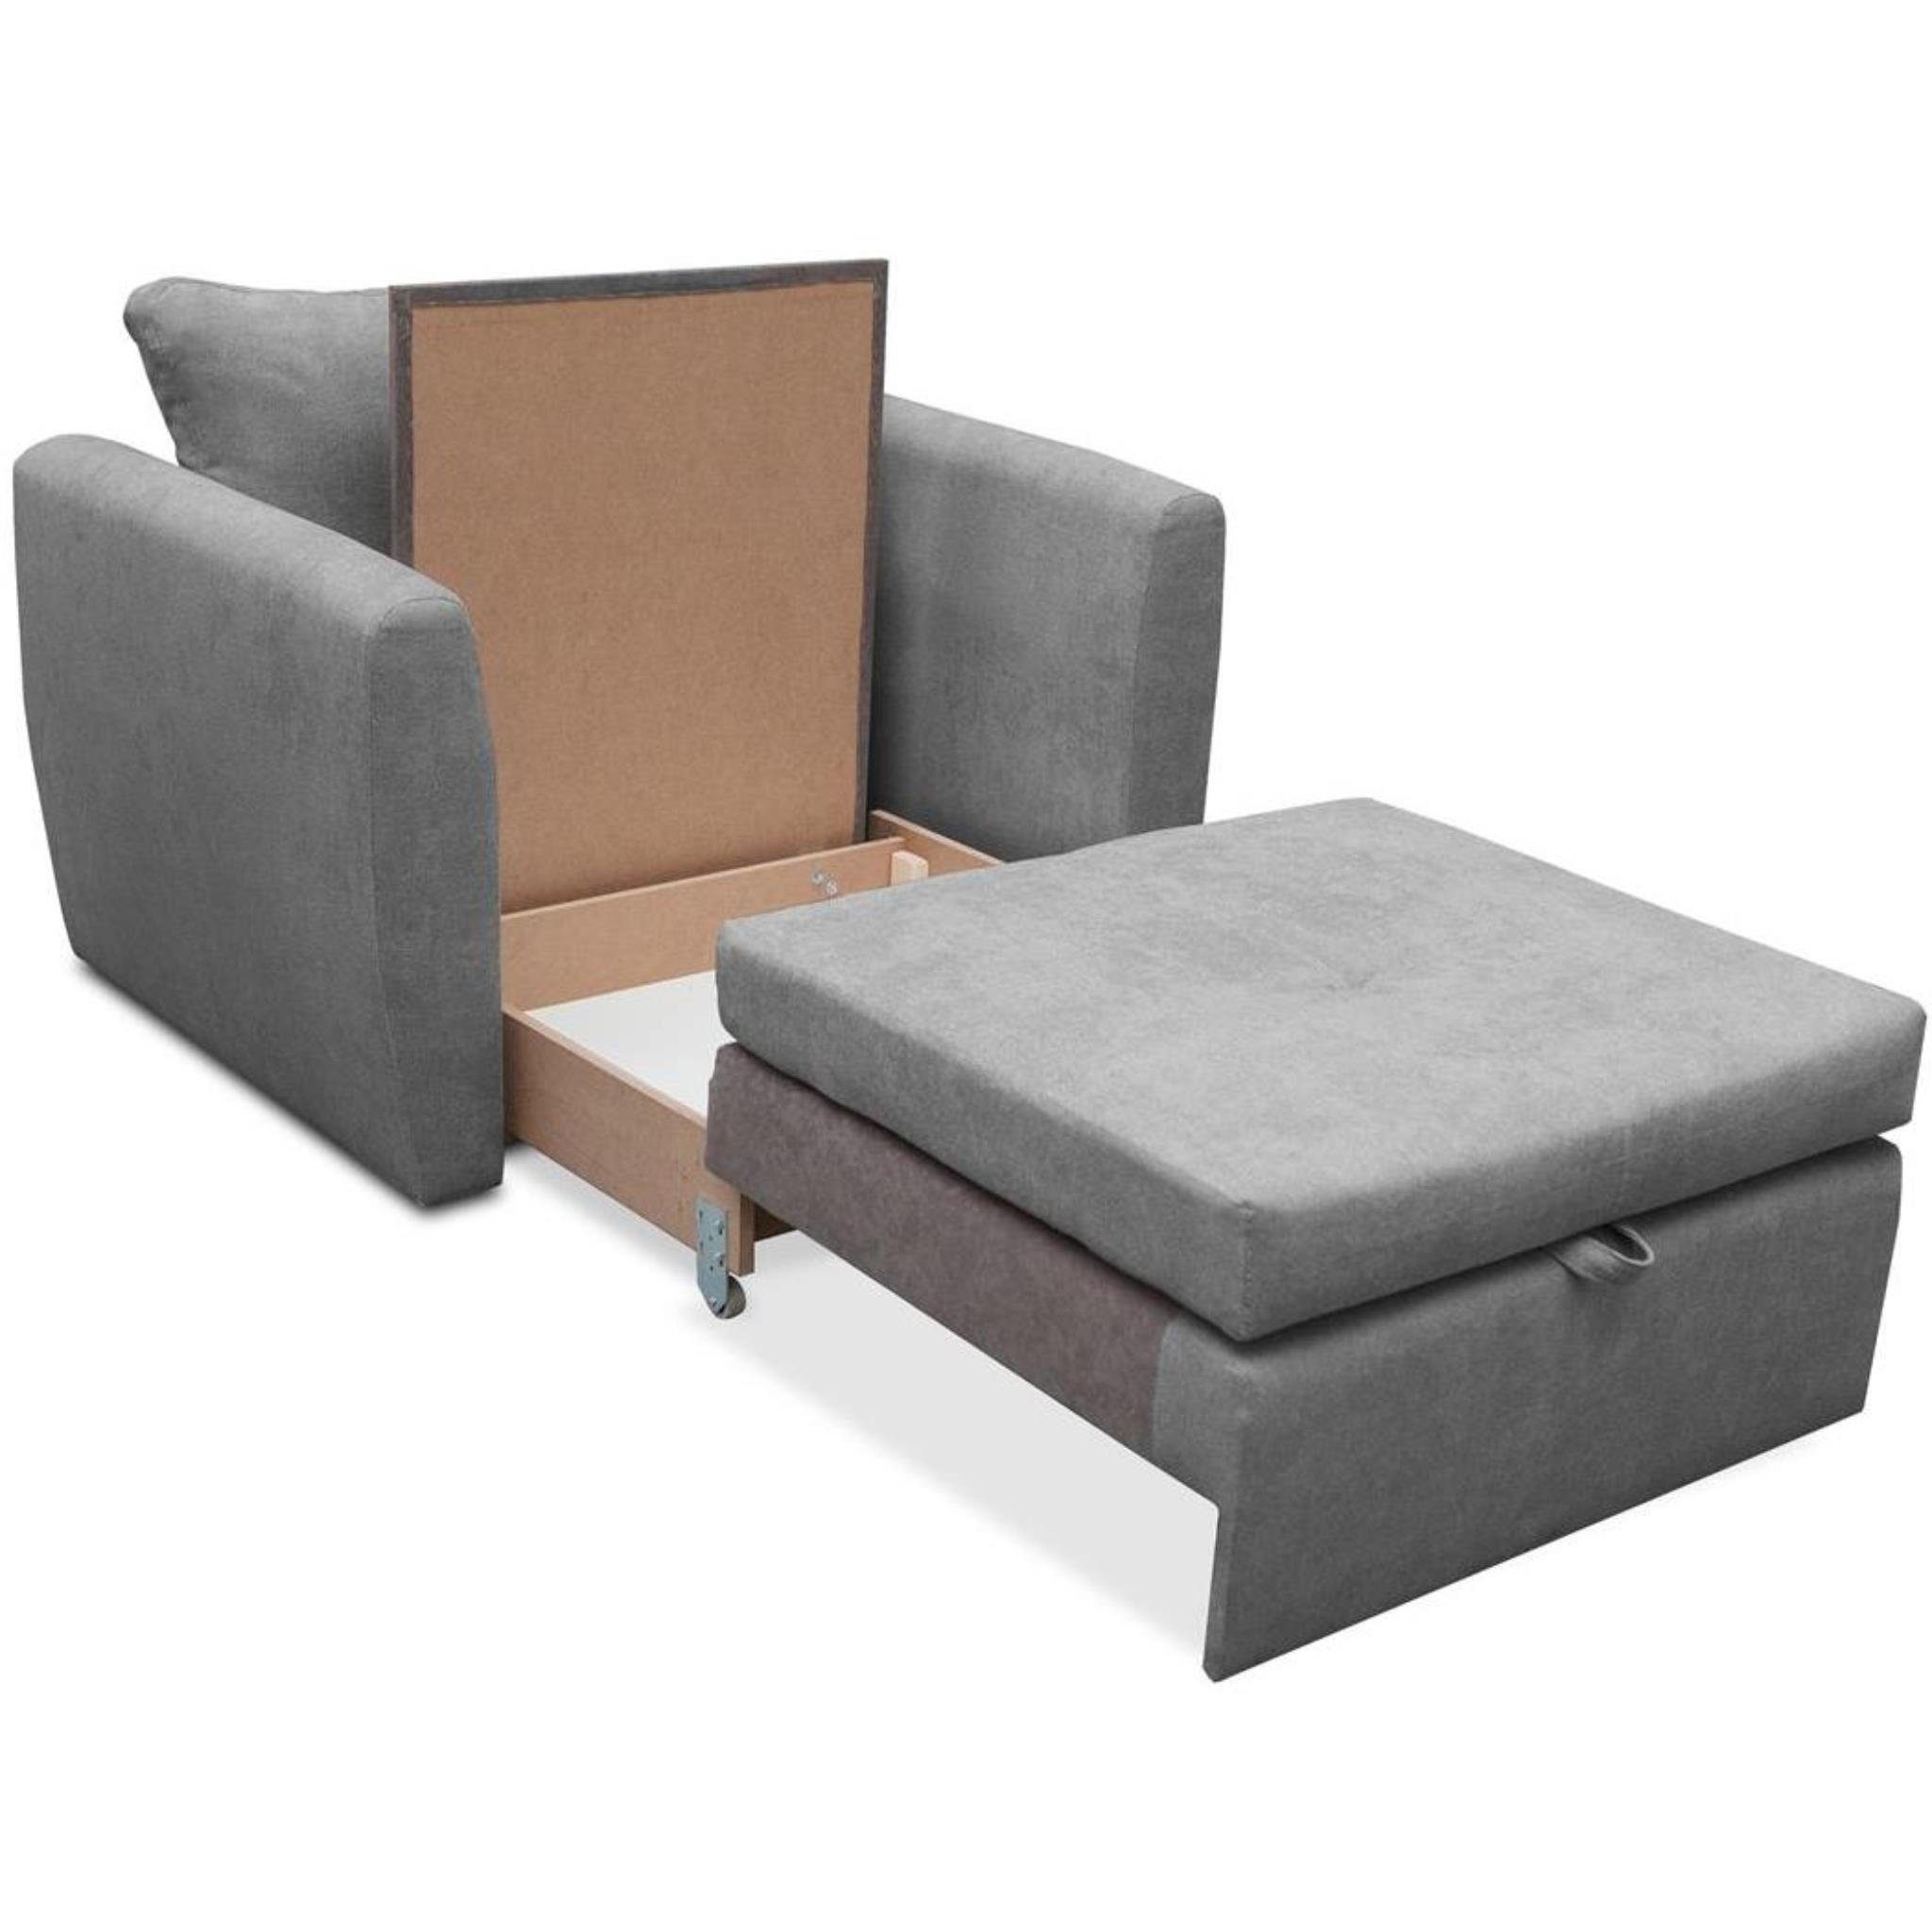 Kamel 1-Sitzer mit Bettkasten, Polstersessel Dunkelgrau Schlaffunktion, (alfa Beautysofa Sofa, Wohnzimmersessel), (Modern Relaxsessel 19)